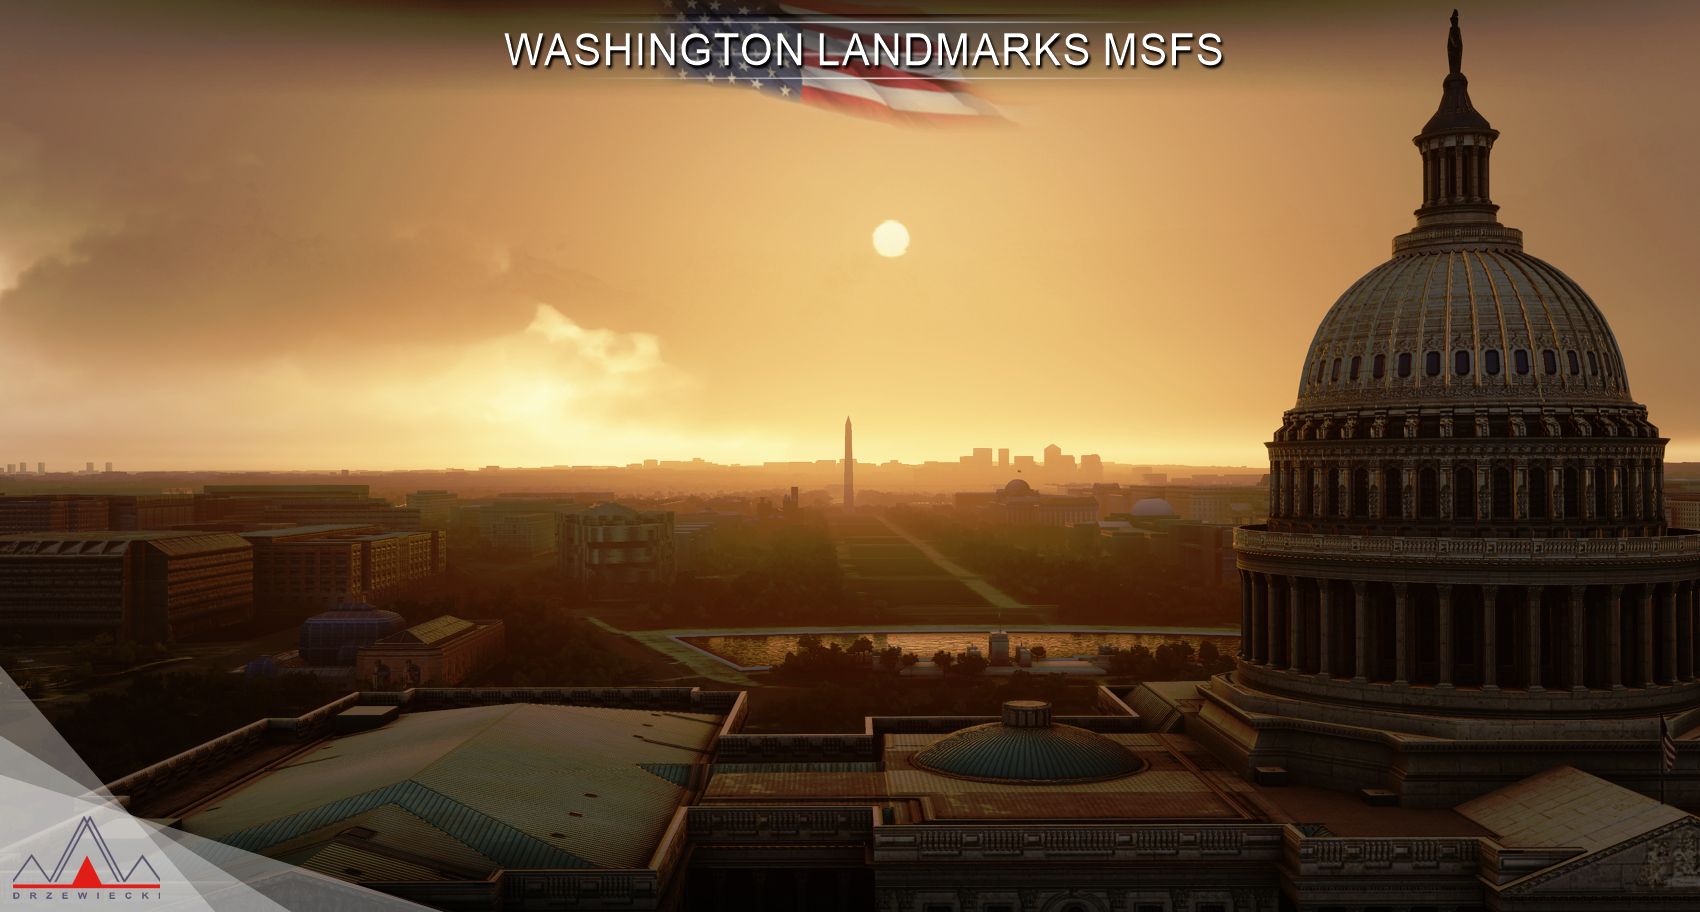 MSFS Washington Landmarks